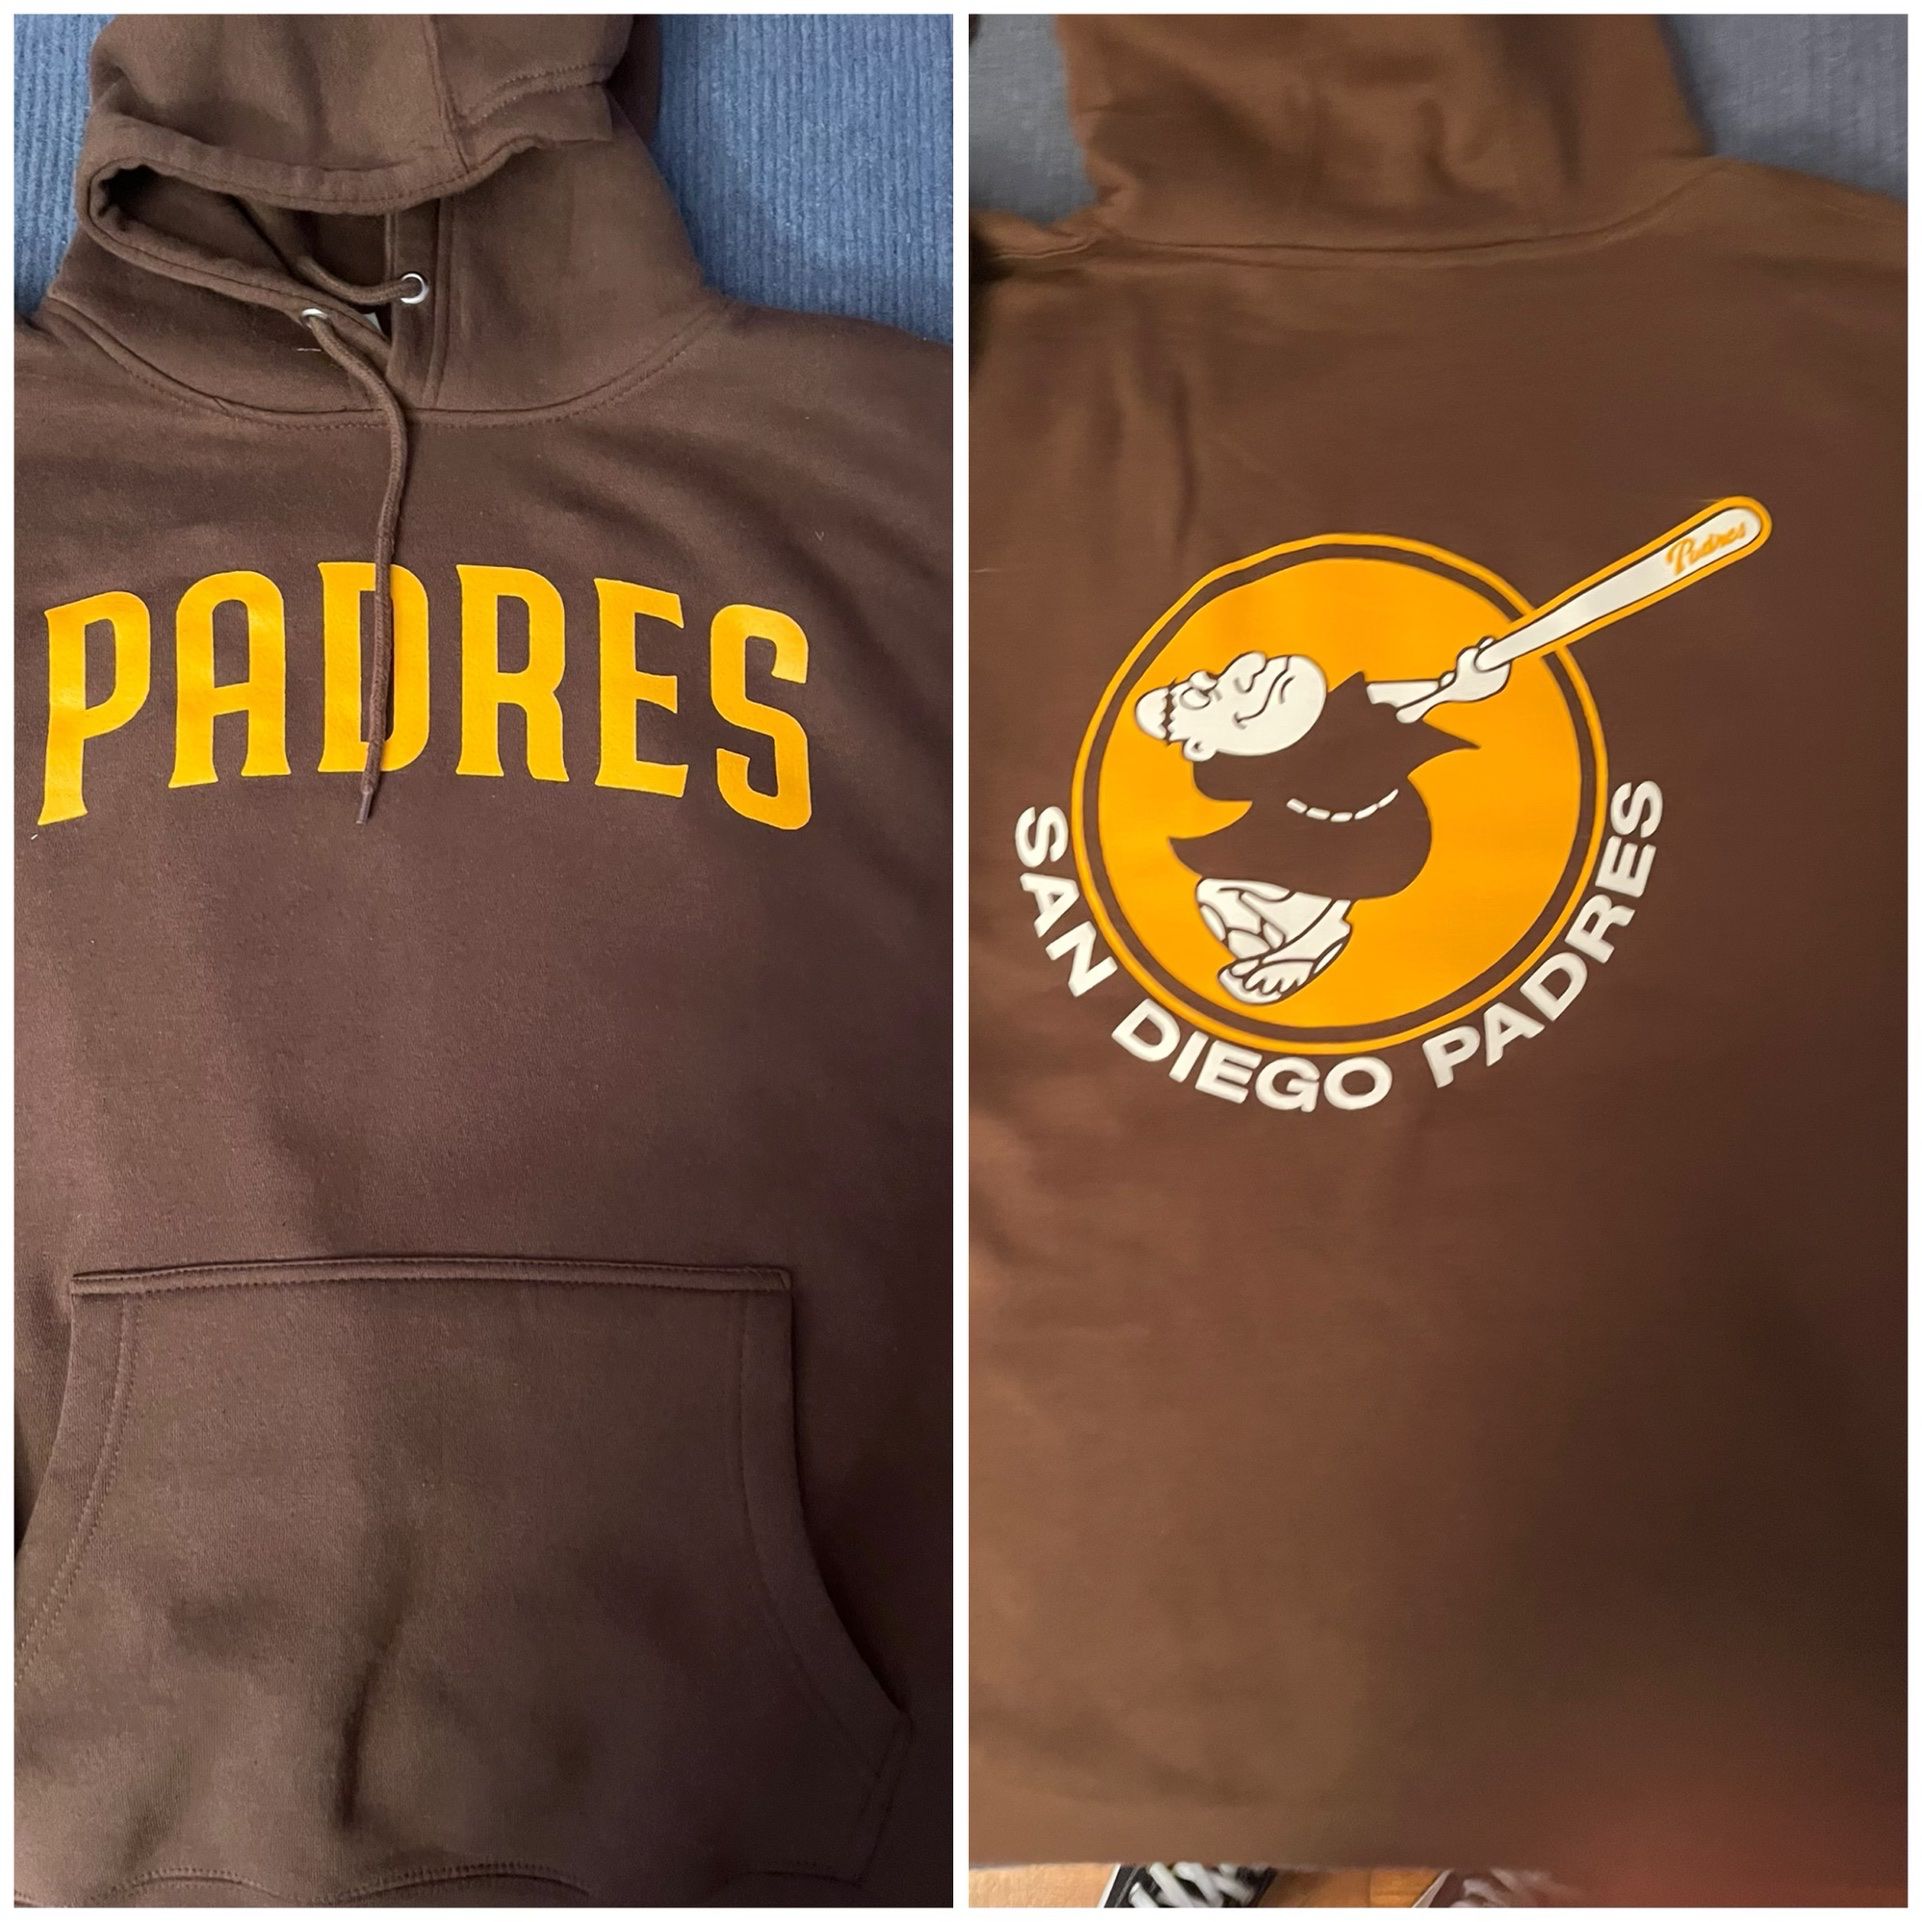 Padres Hoodies And Shirts 